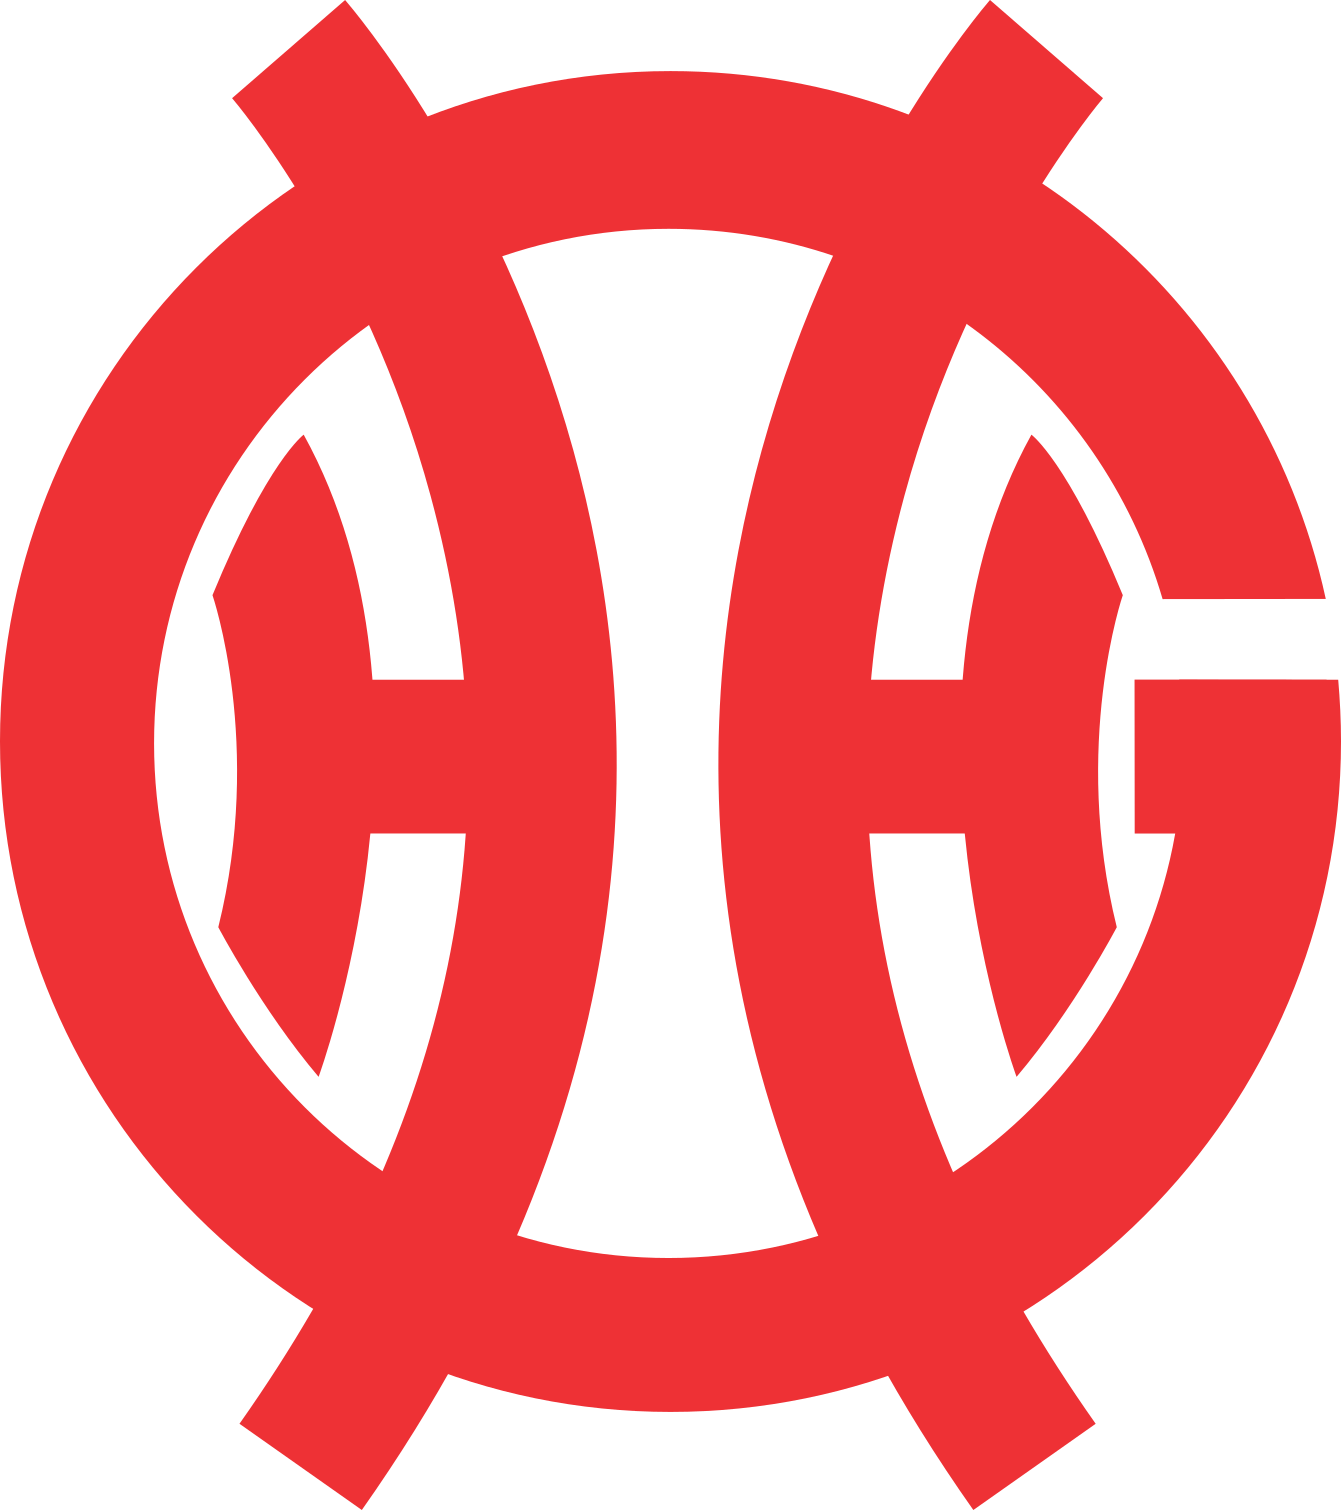 Genting Malaysia Berhad logo (transparent PNG)